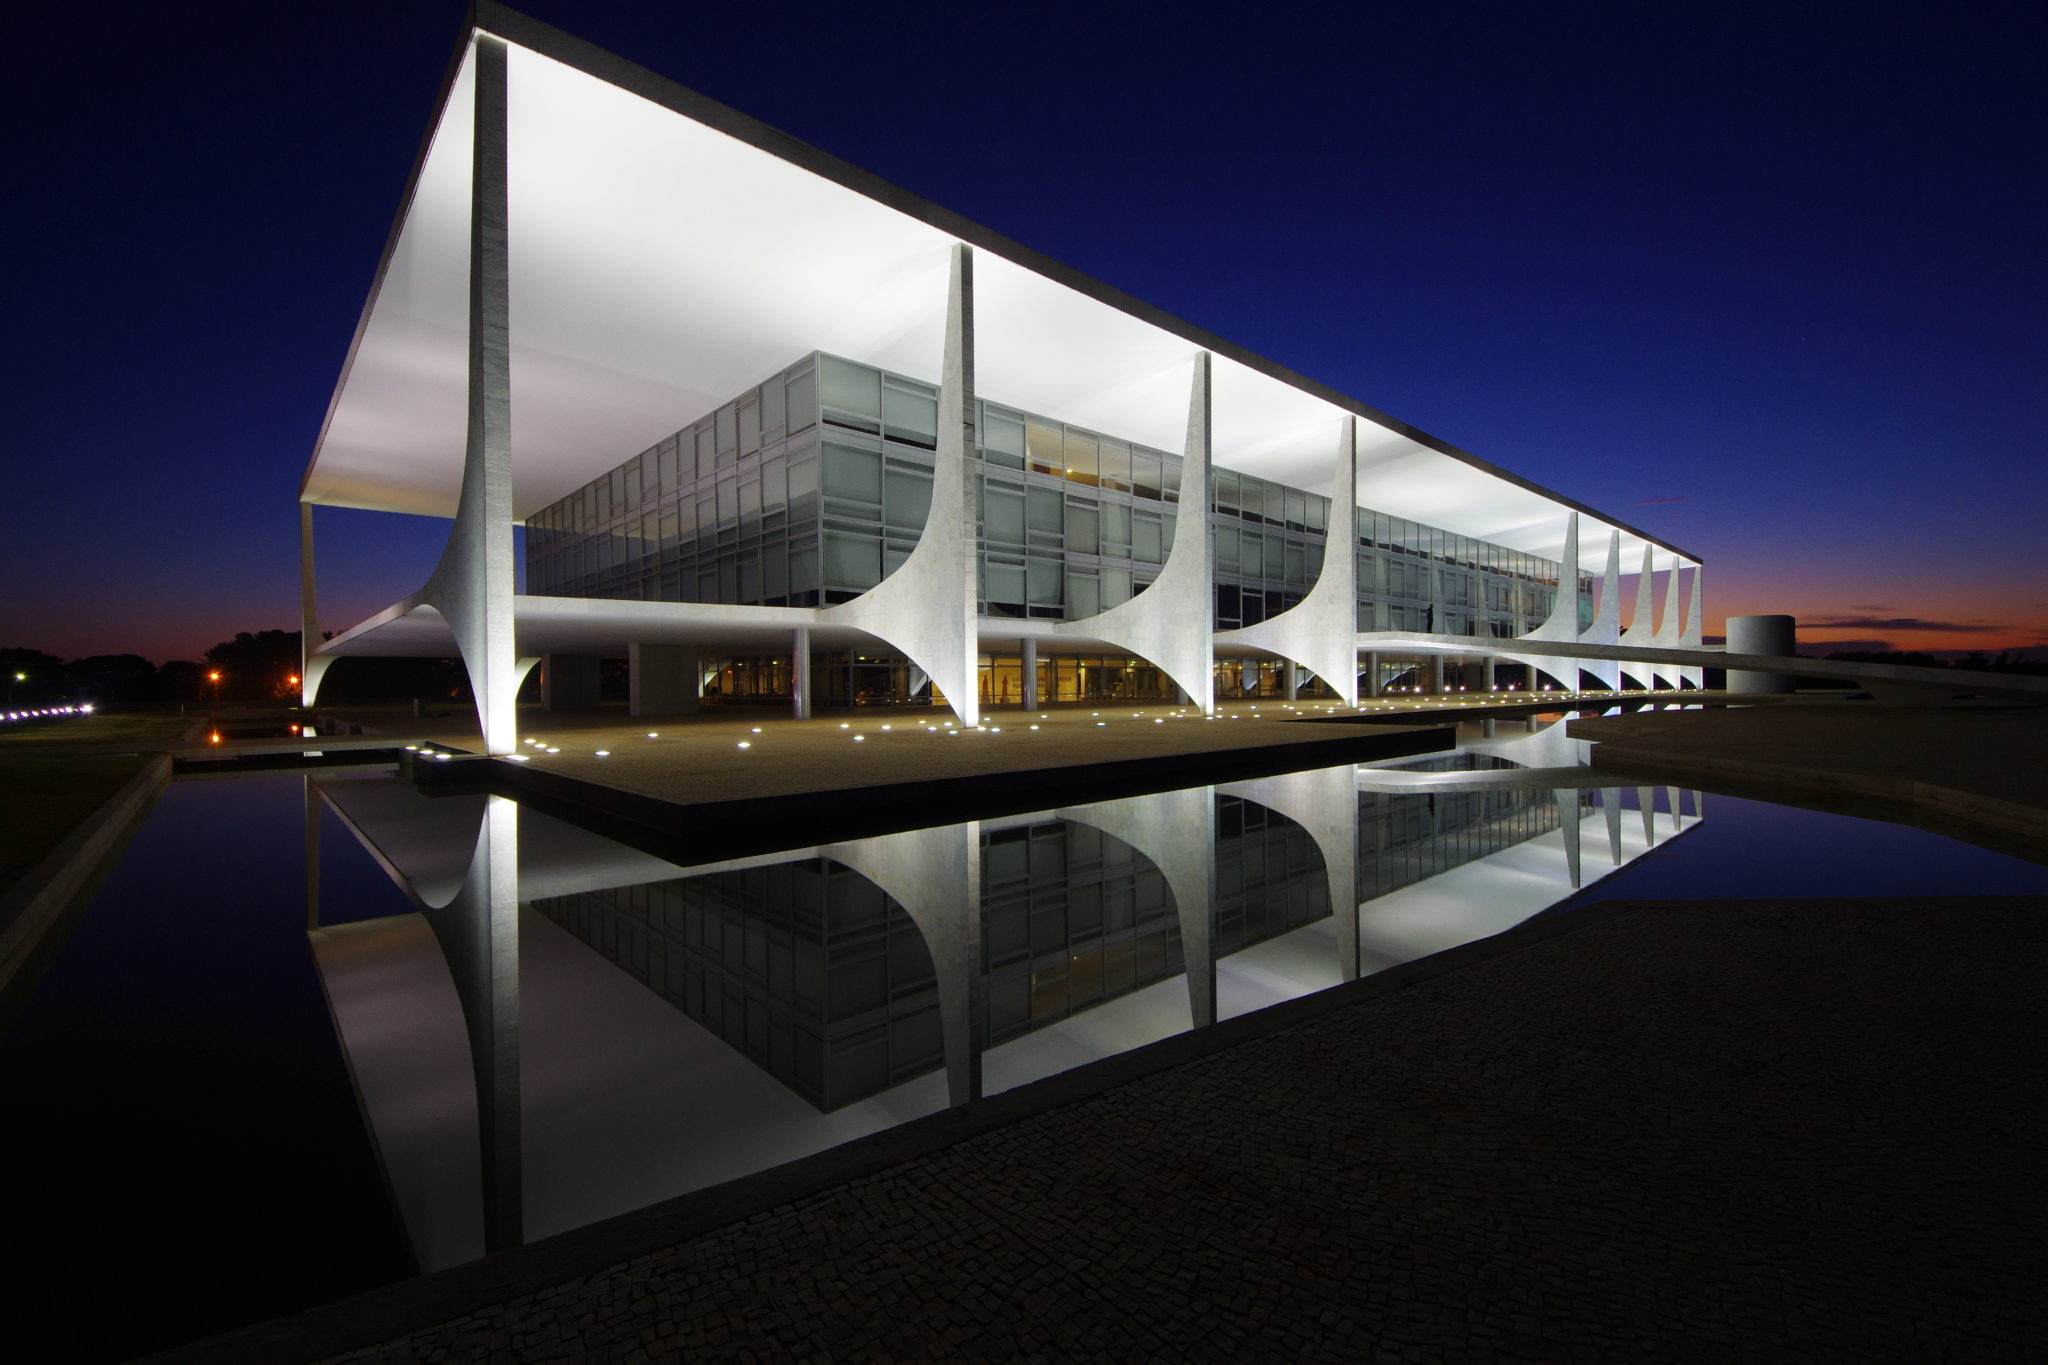 Oscar Niemeyer's most impressive projects